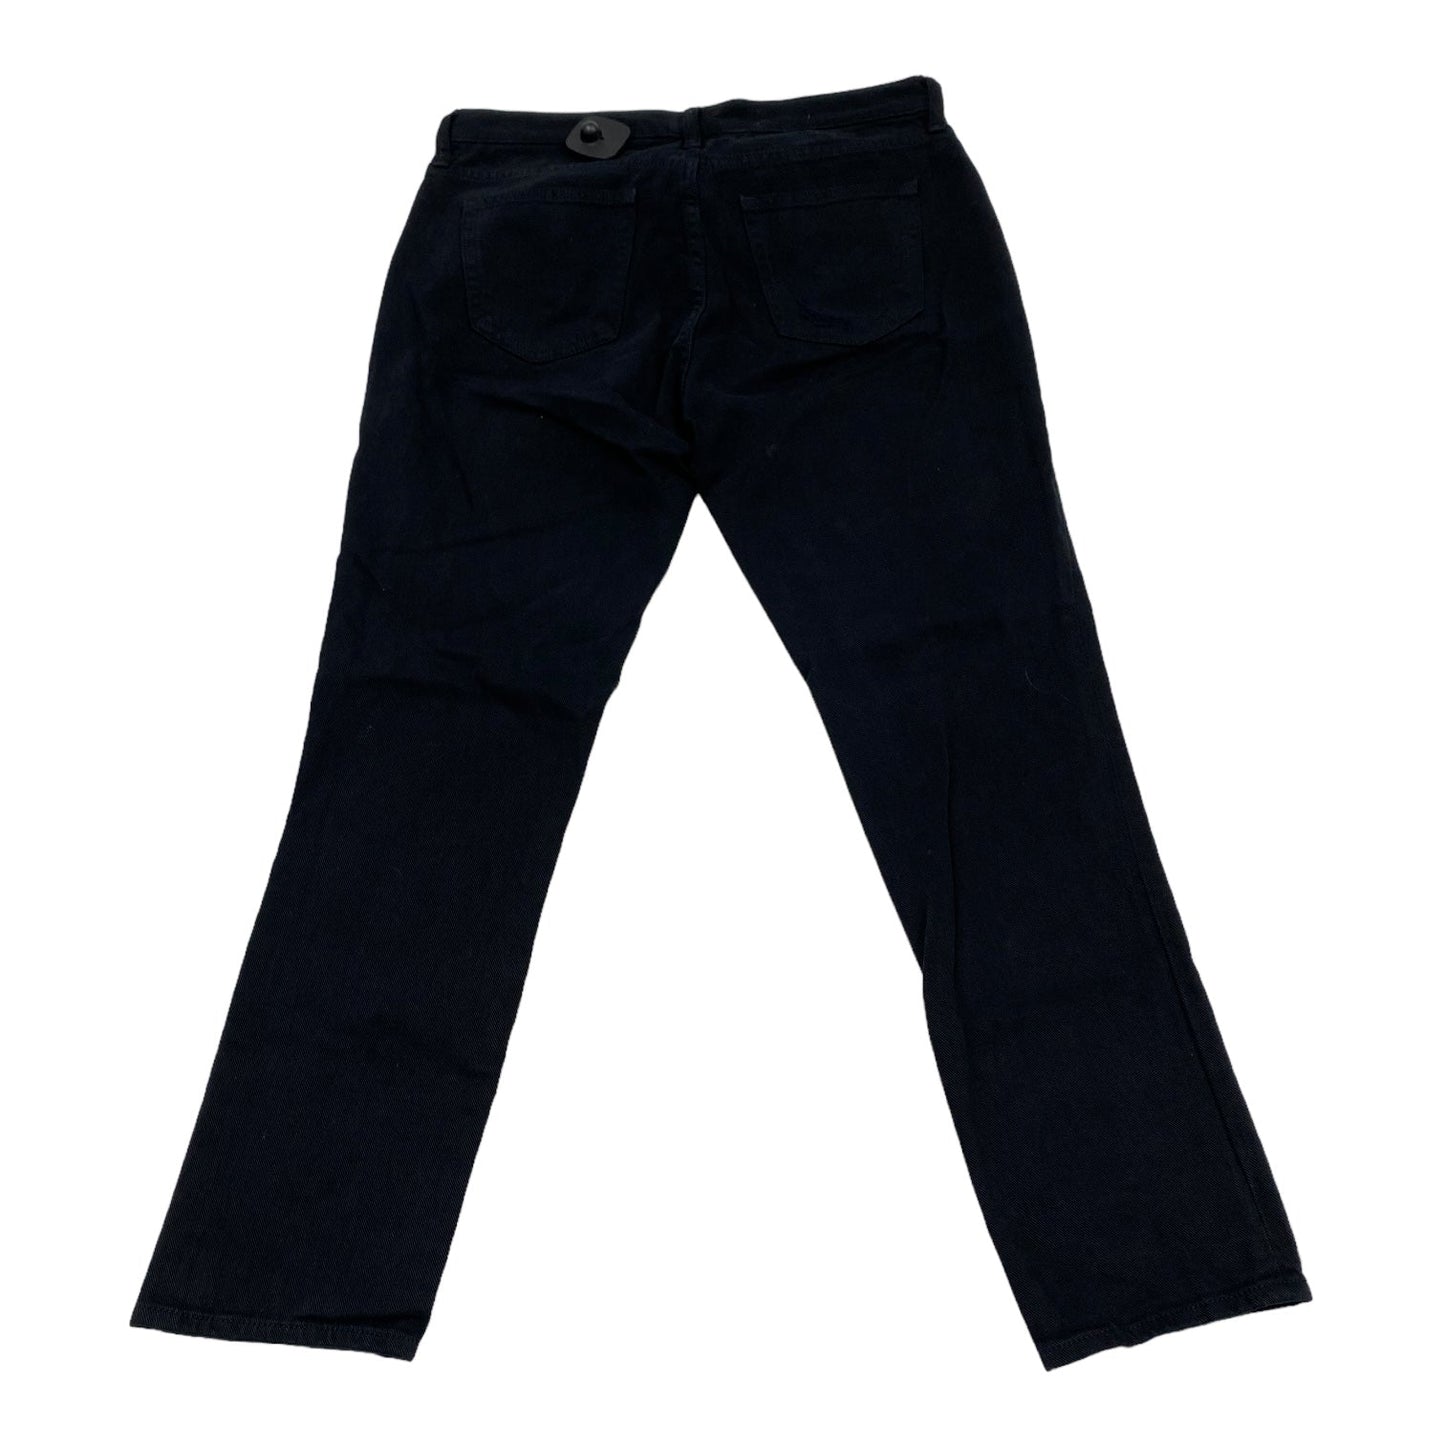 Black Jeans Straight Gap, Size 8